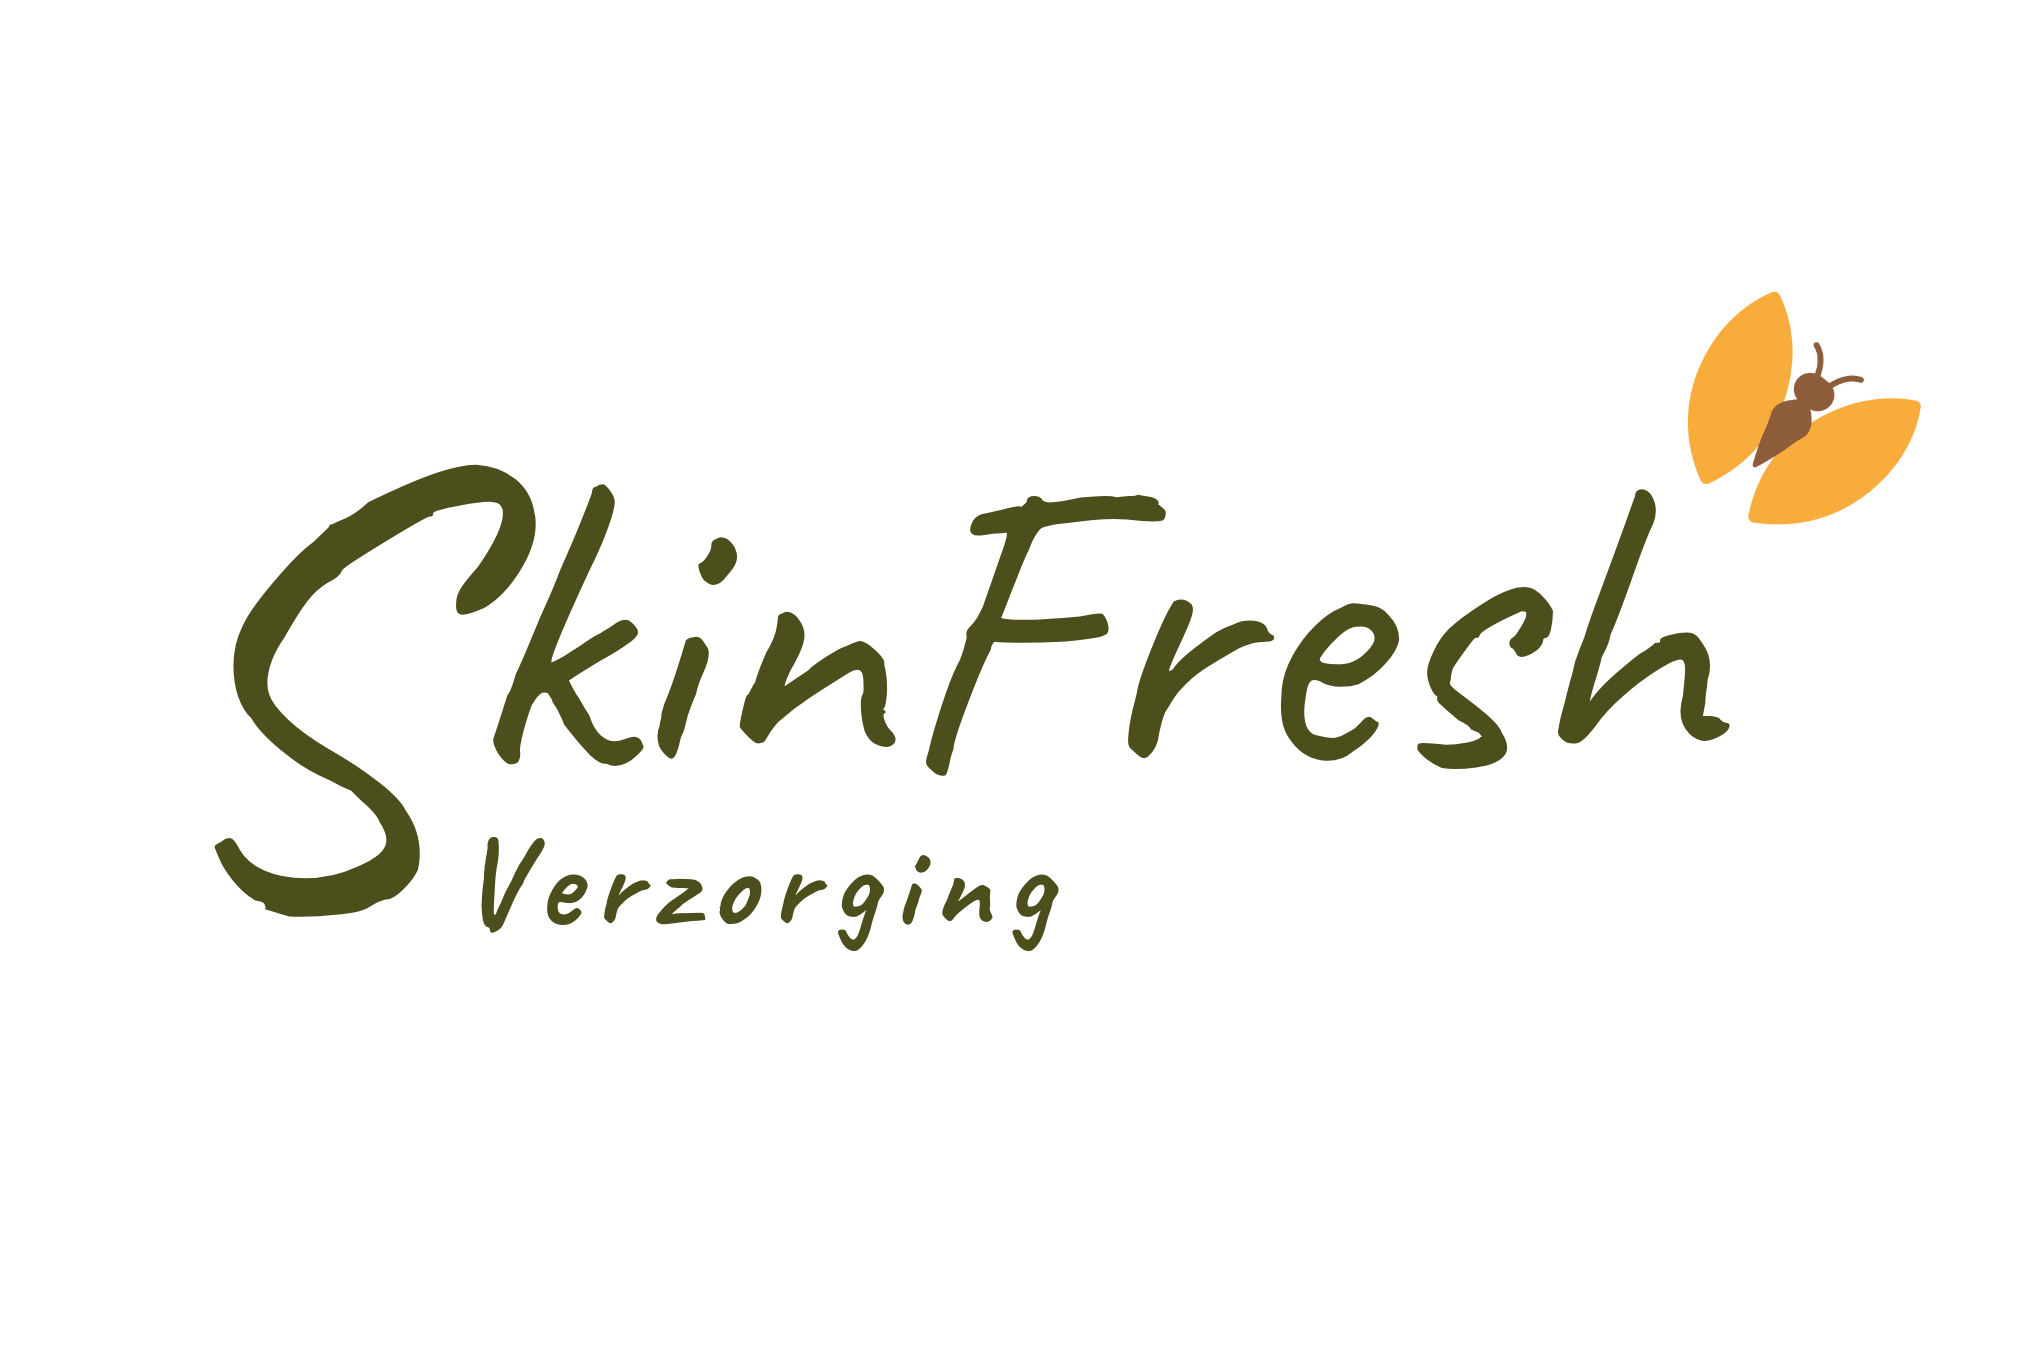 SkinFresh verzorging Eqinful